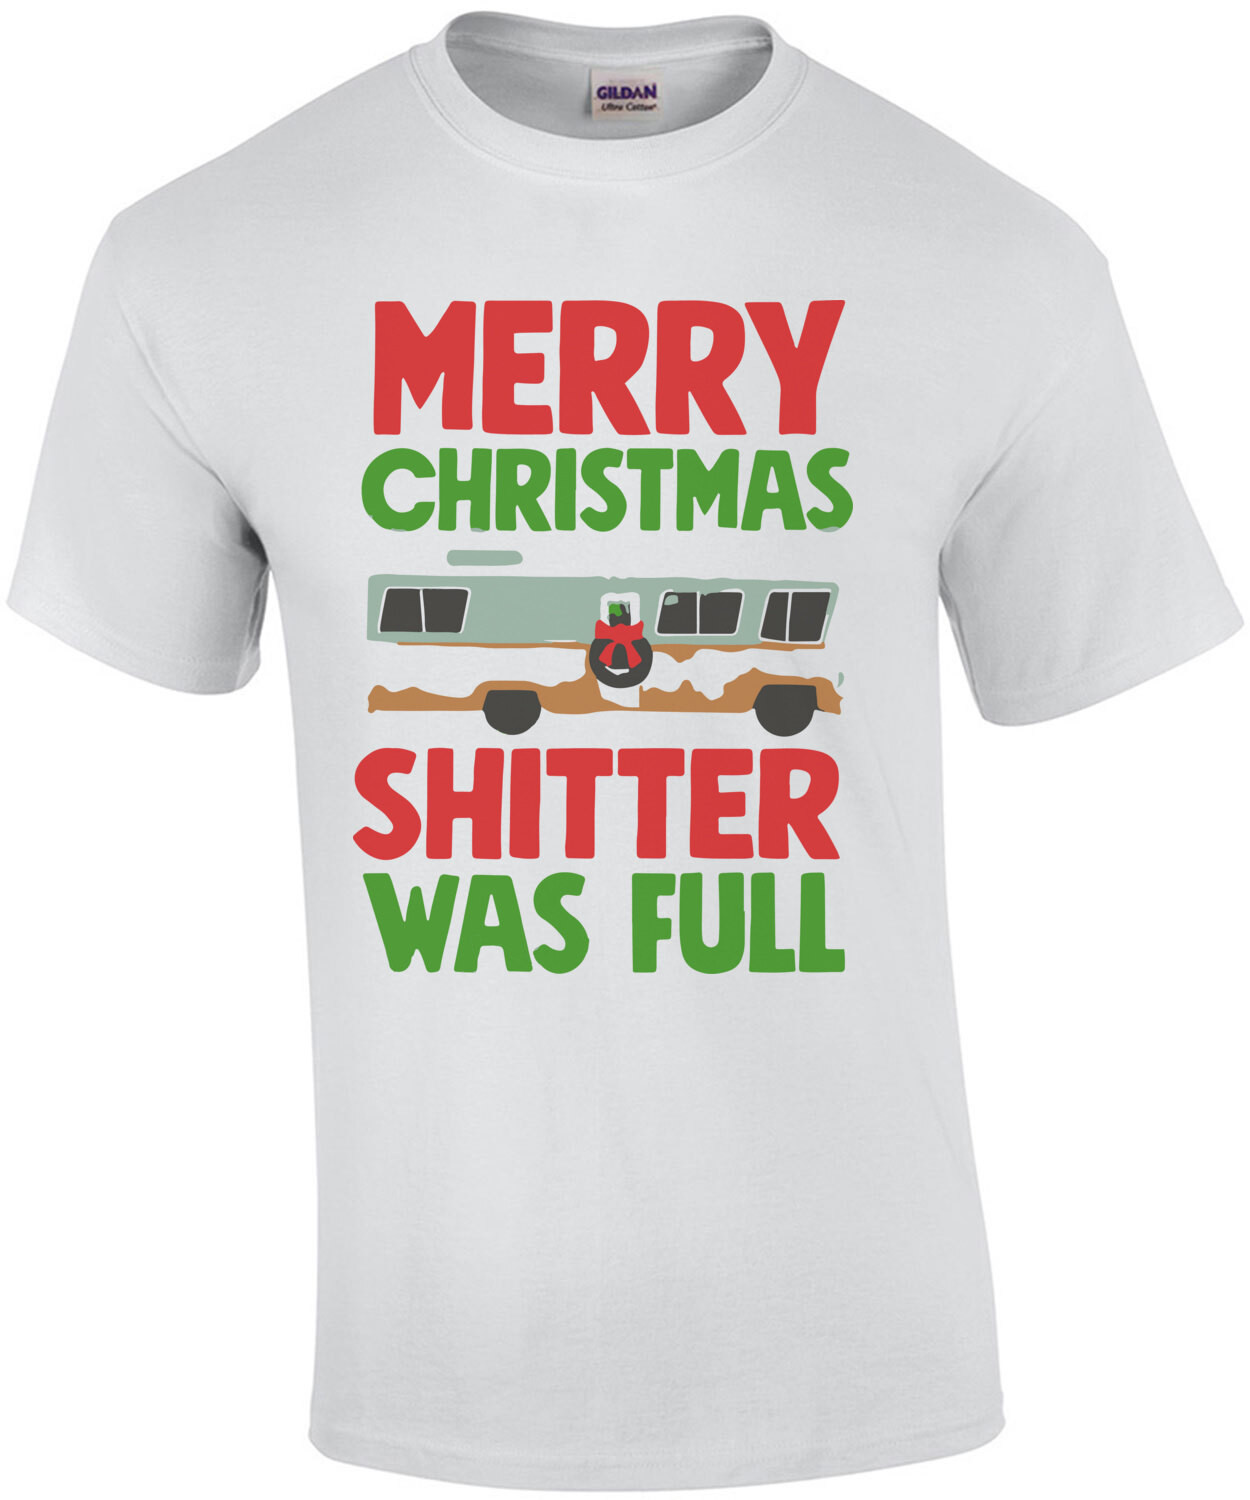 Merry Christmas - Shitter Was Full - Christmas Vacation T-Shirt 